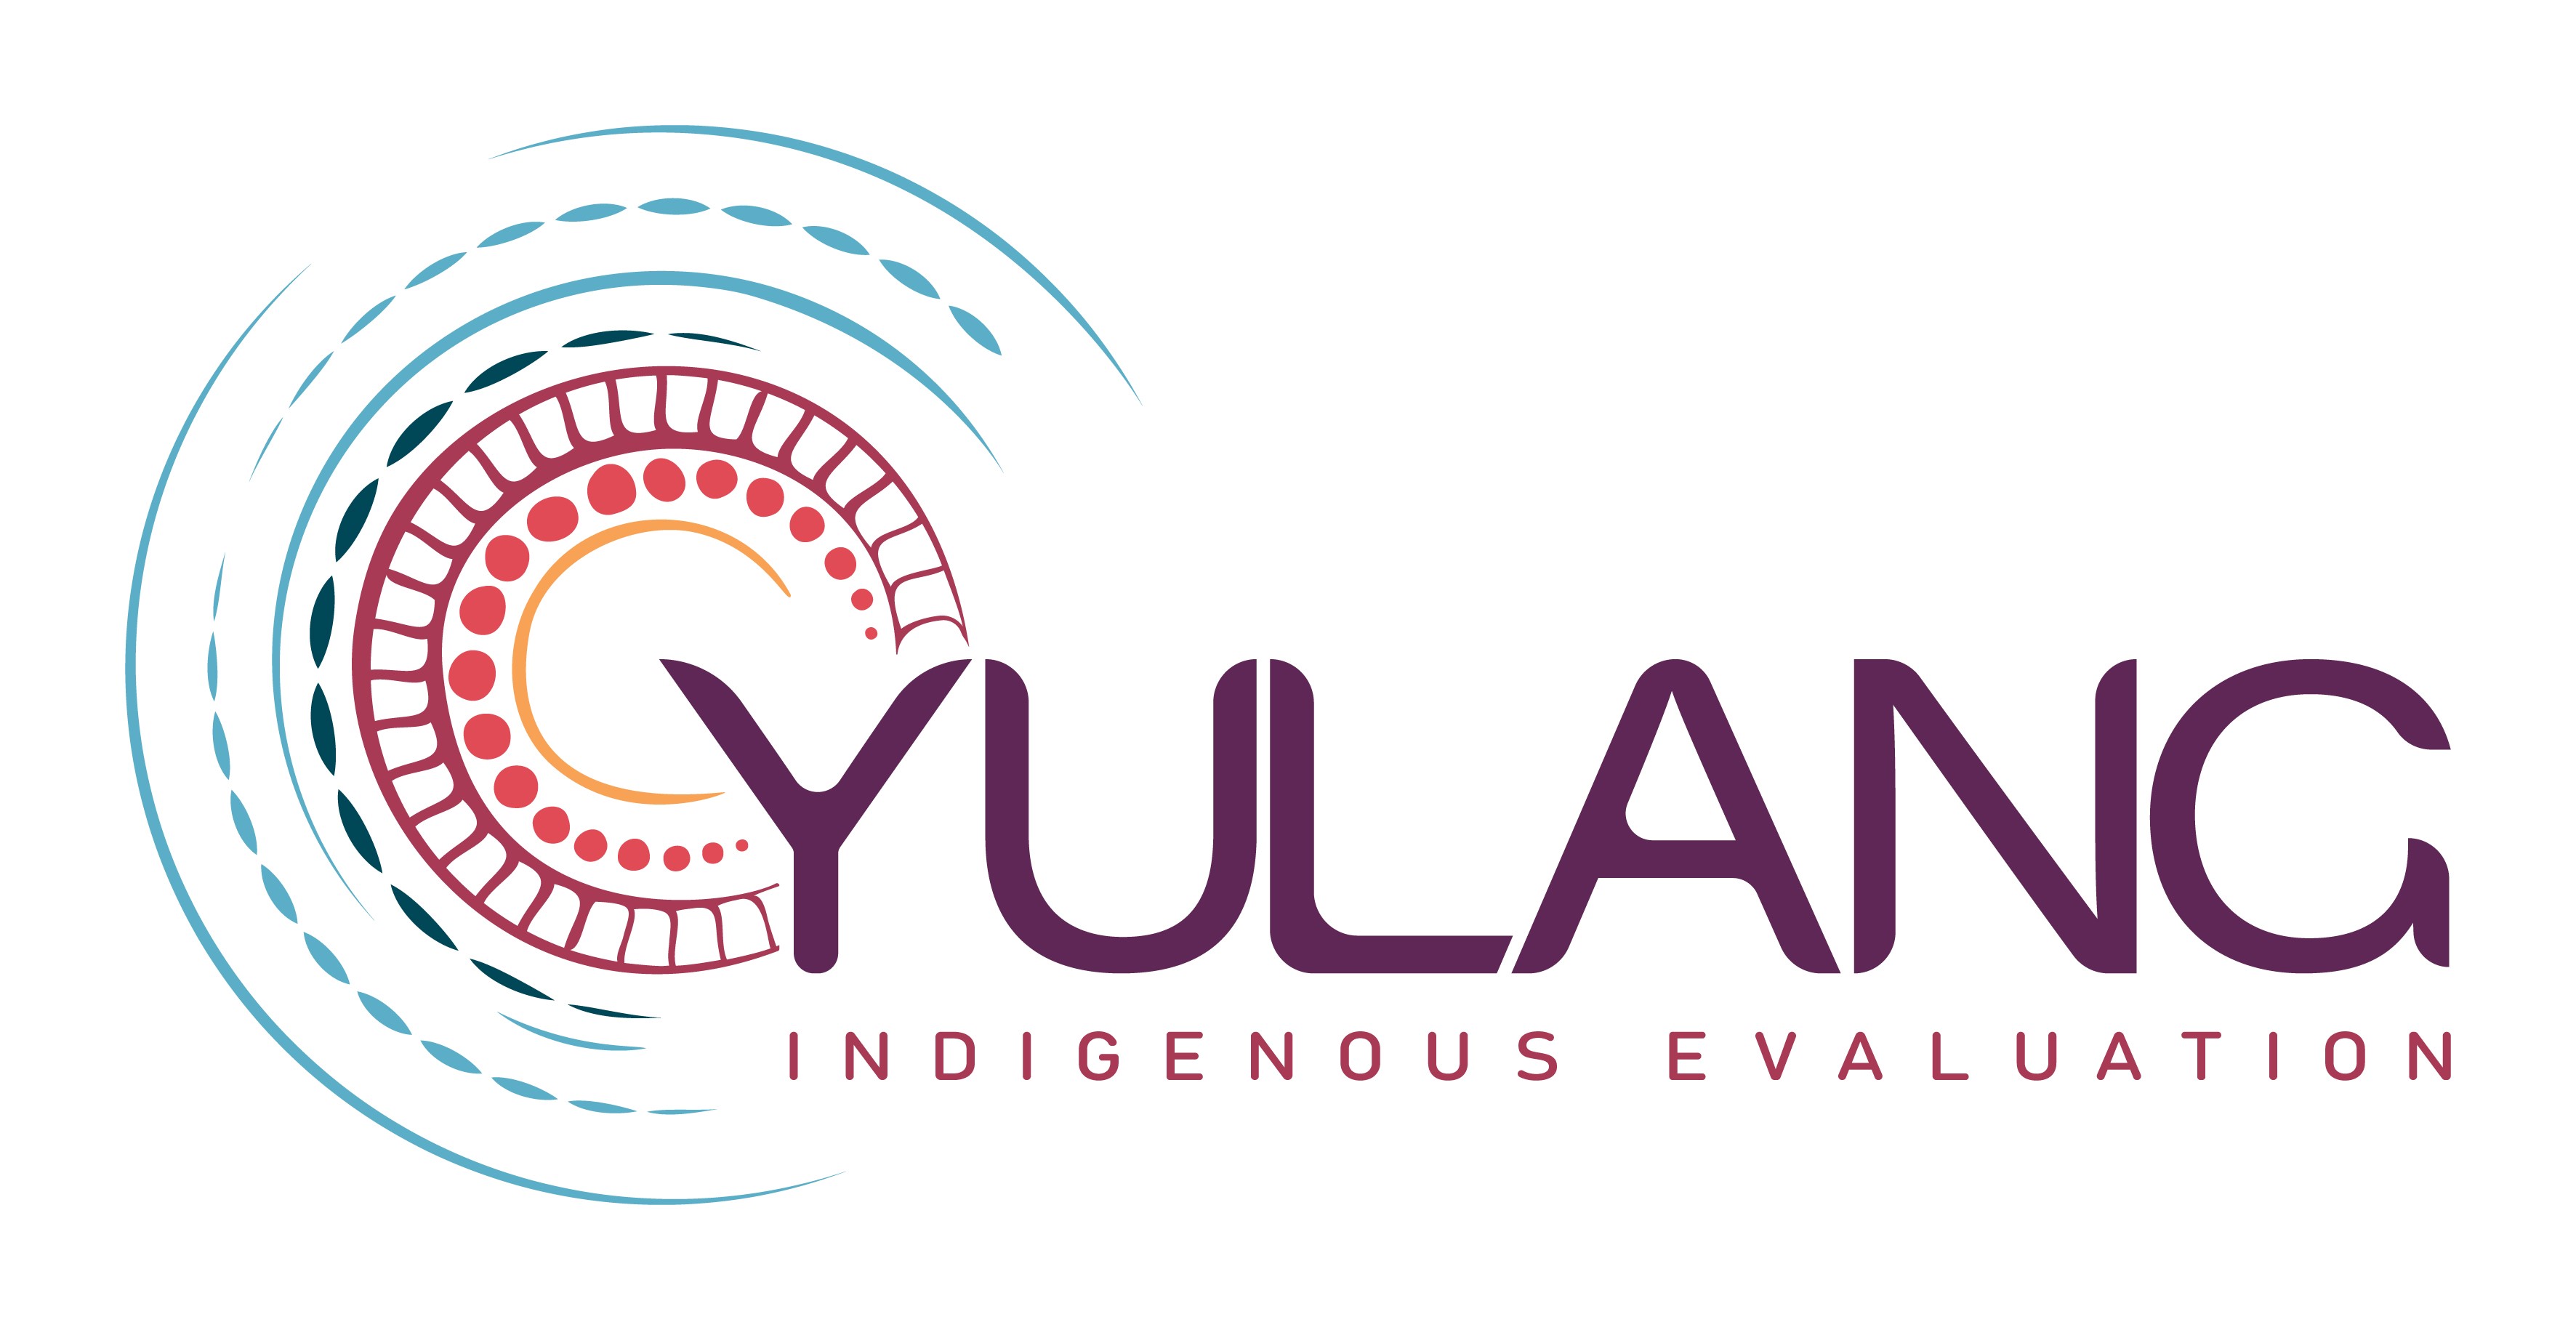 Yulang Indigenous Evaluation Logo